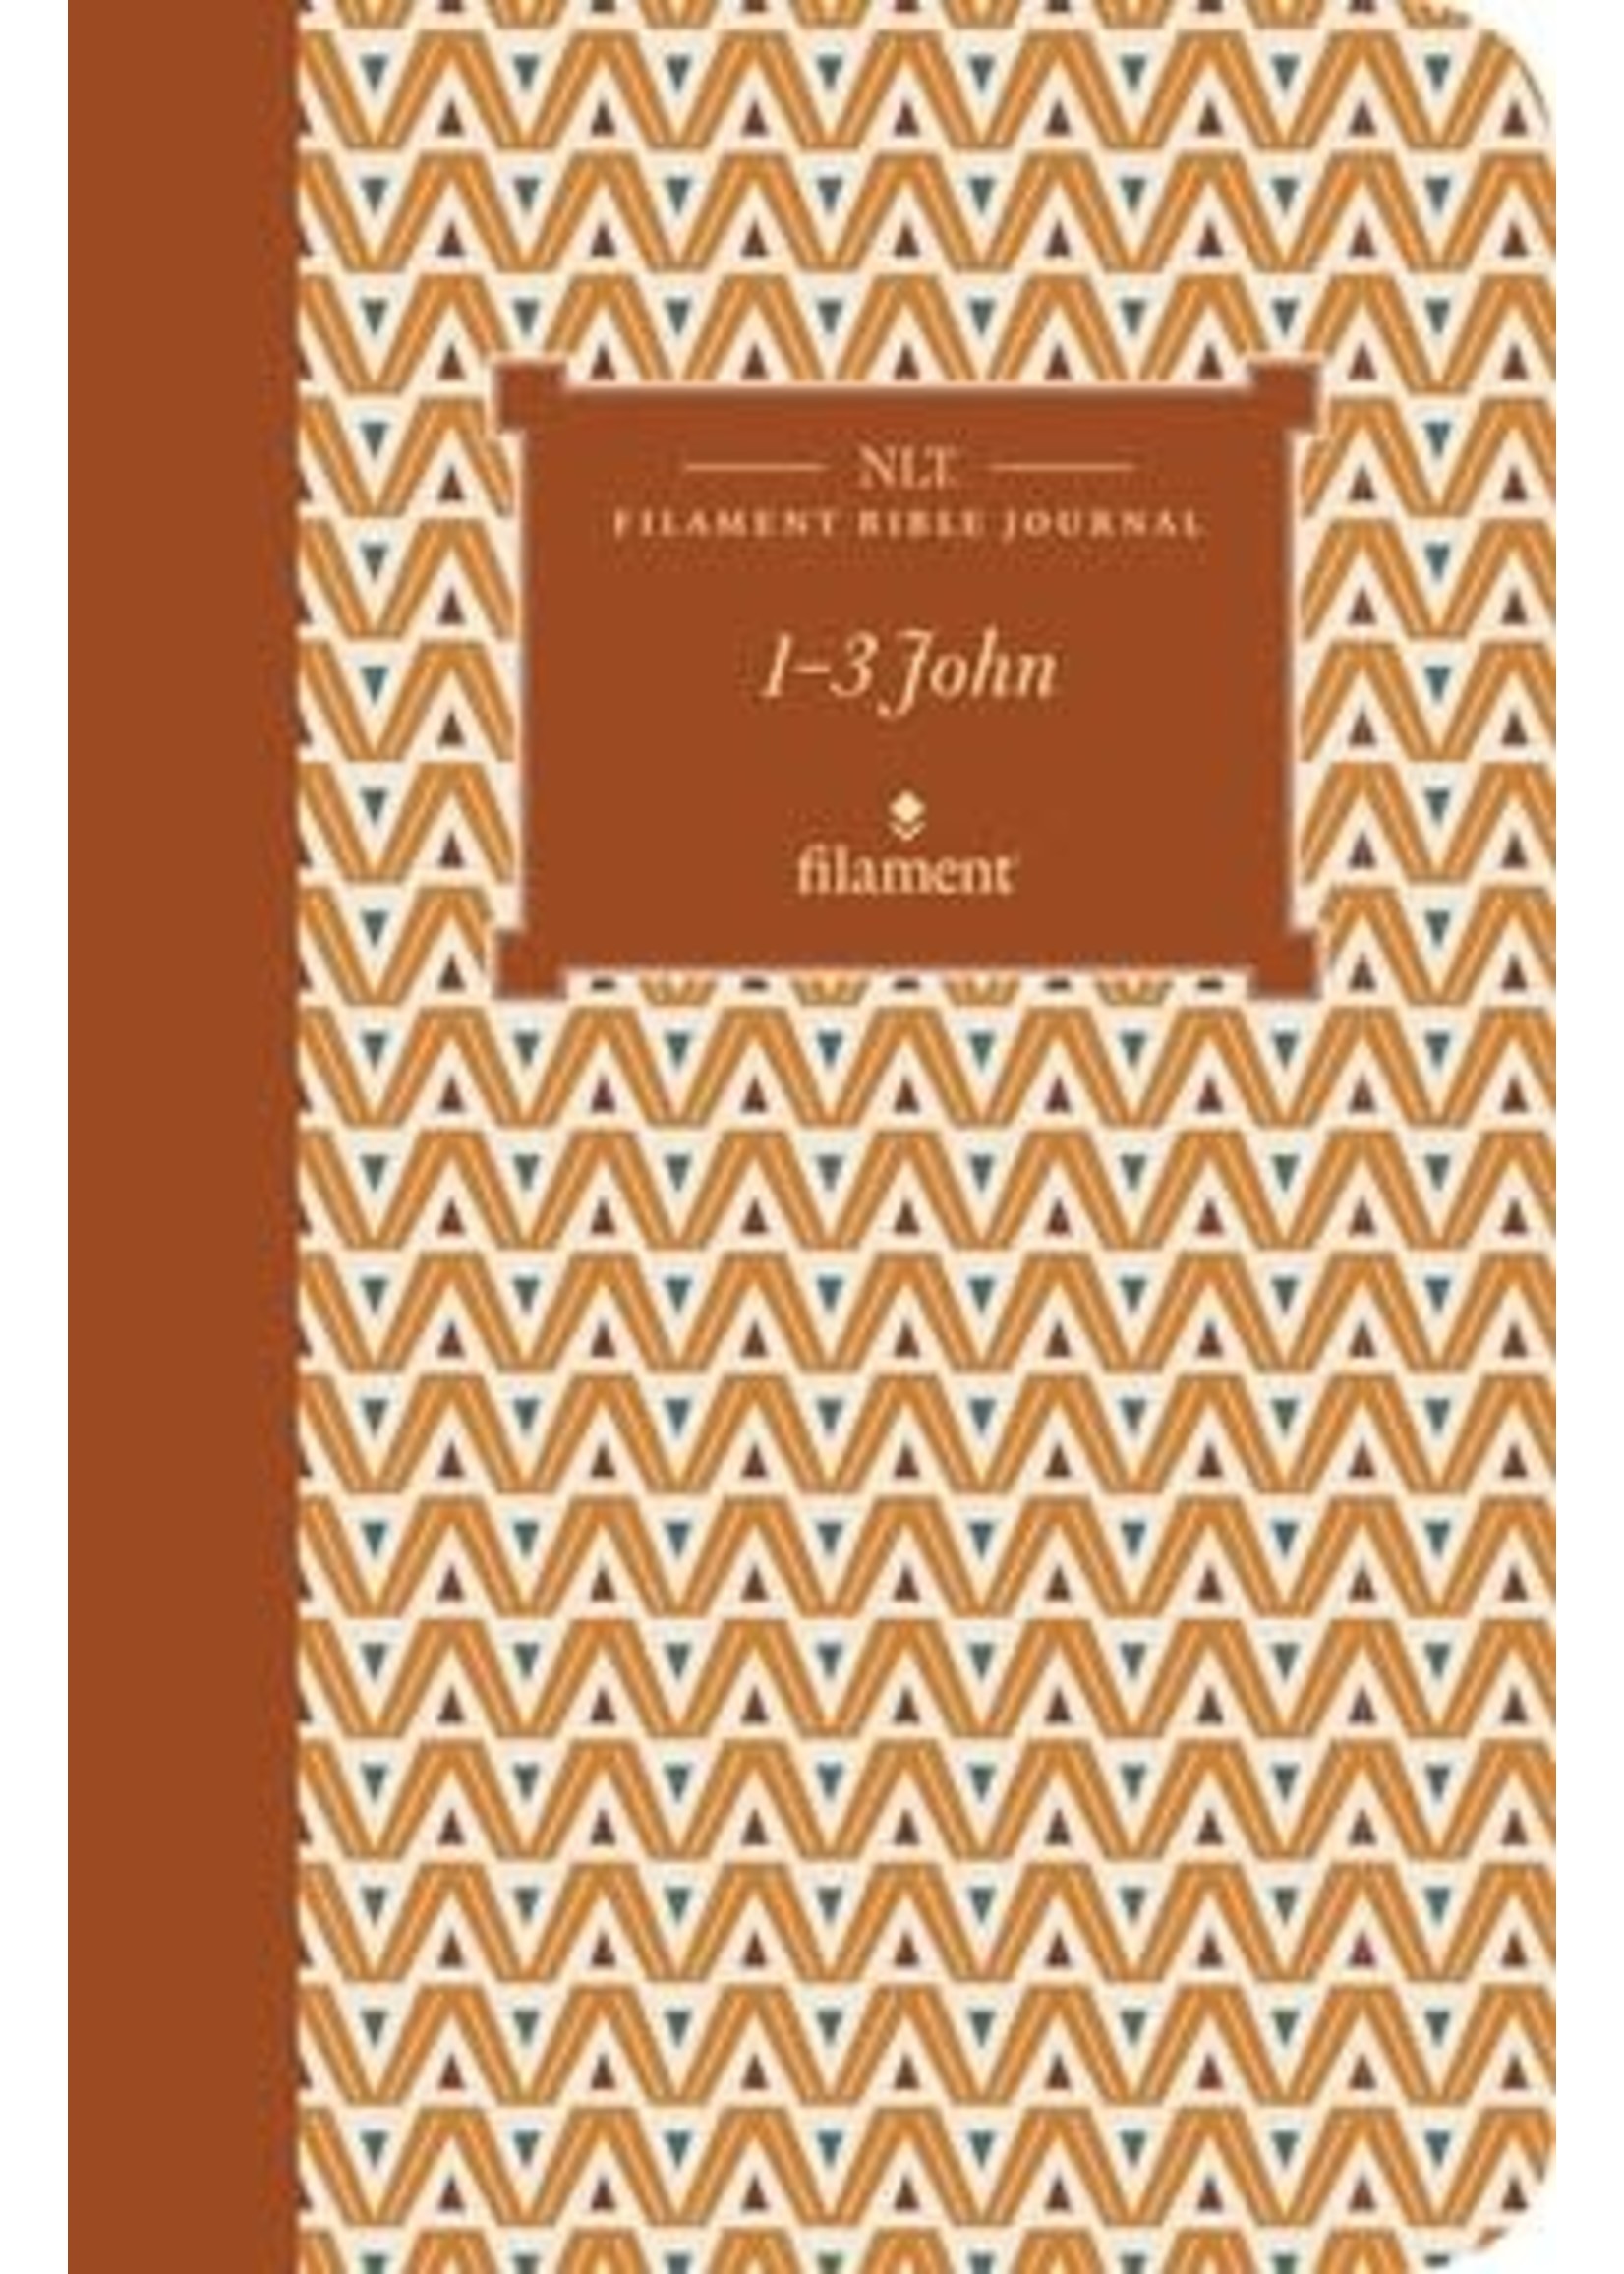 1-3 John NLT Filament Journal